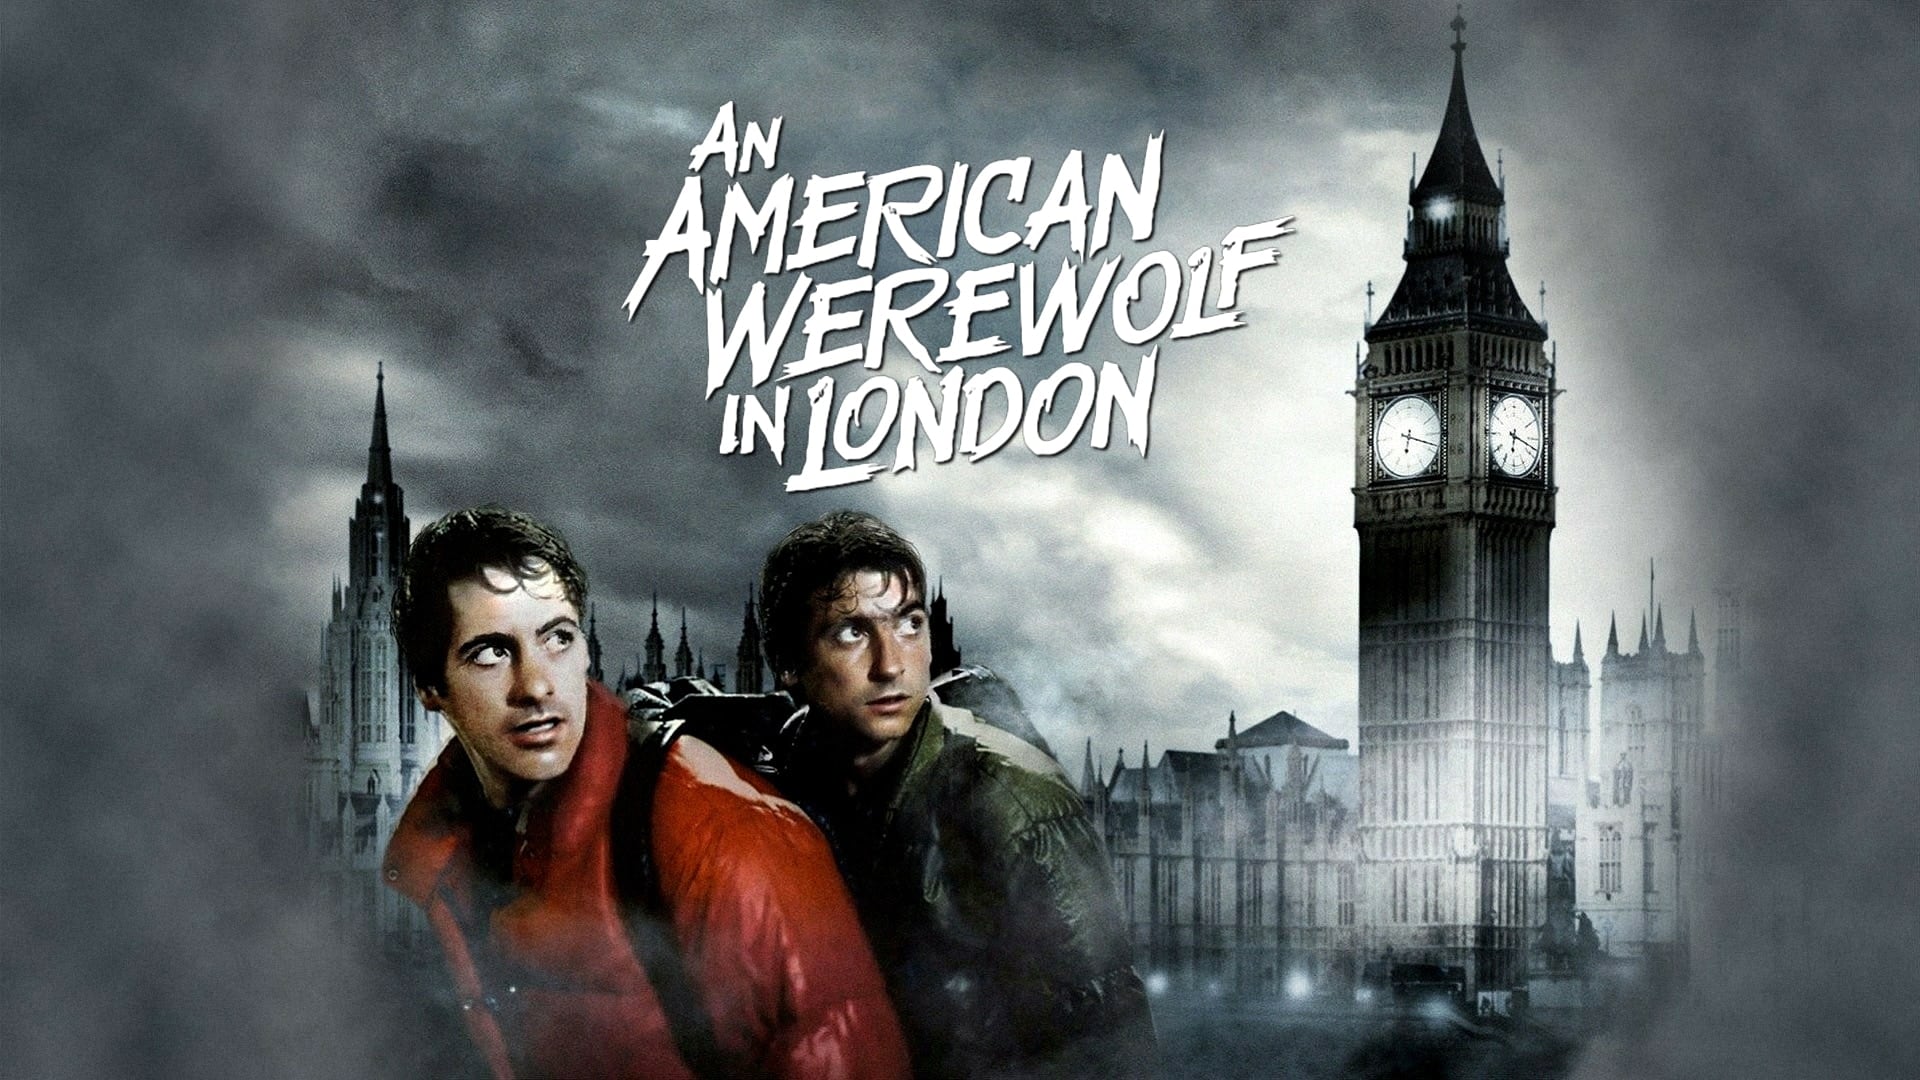 Watch An American Werewolf in London Online | Stream Full Movies